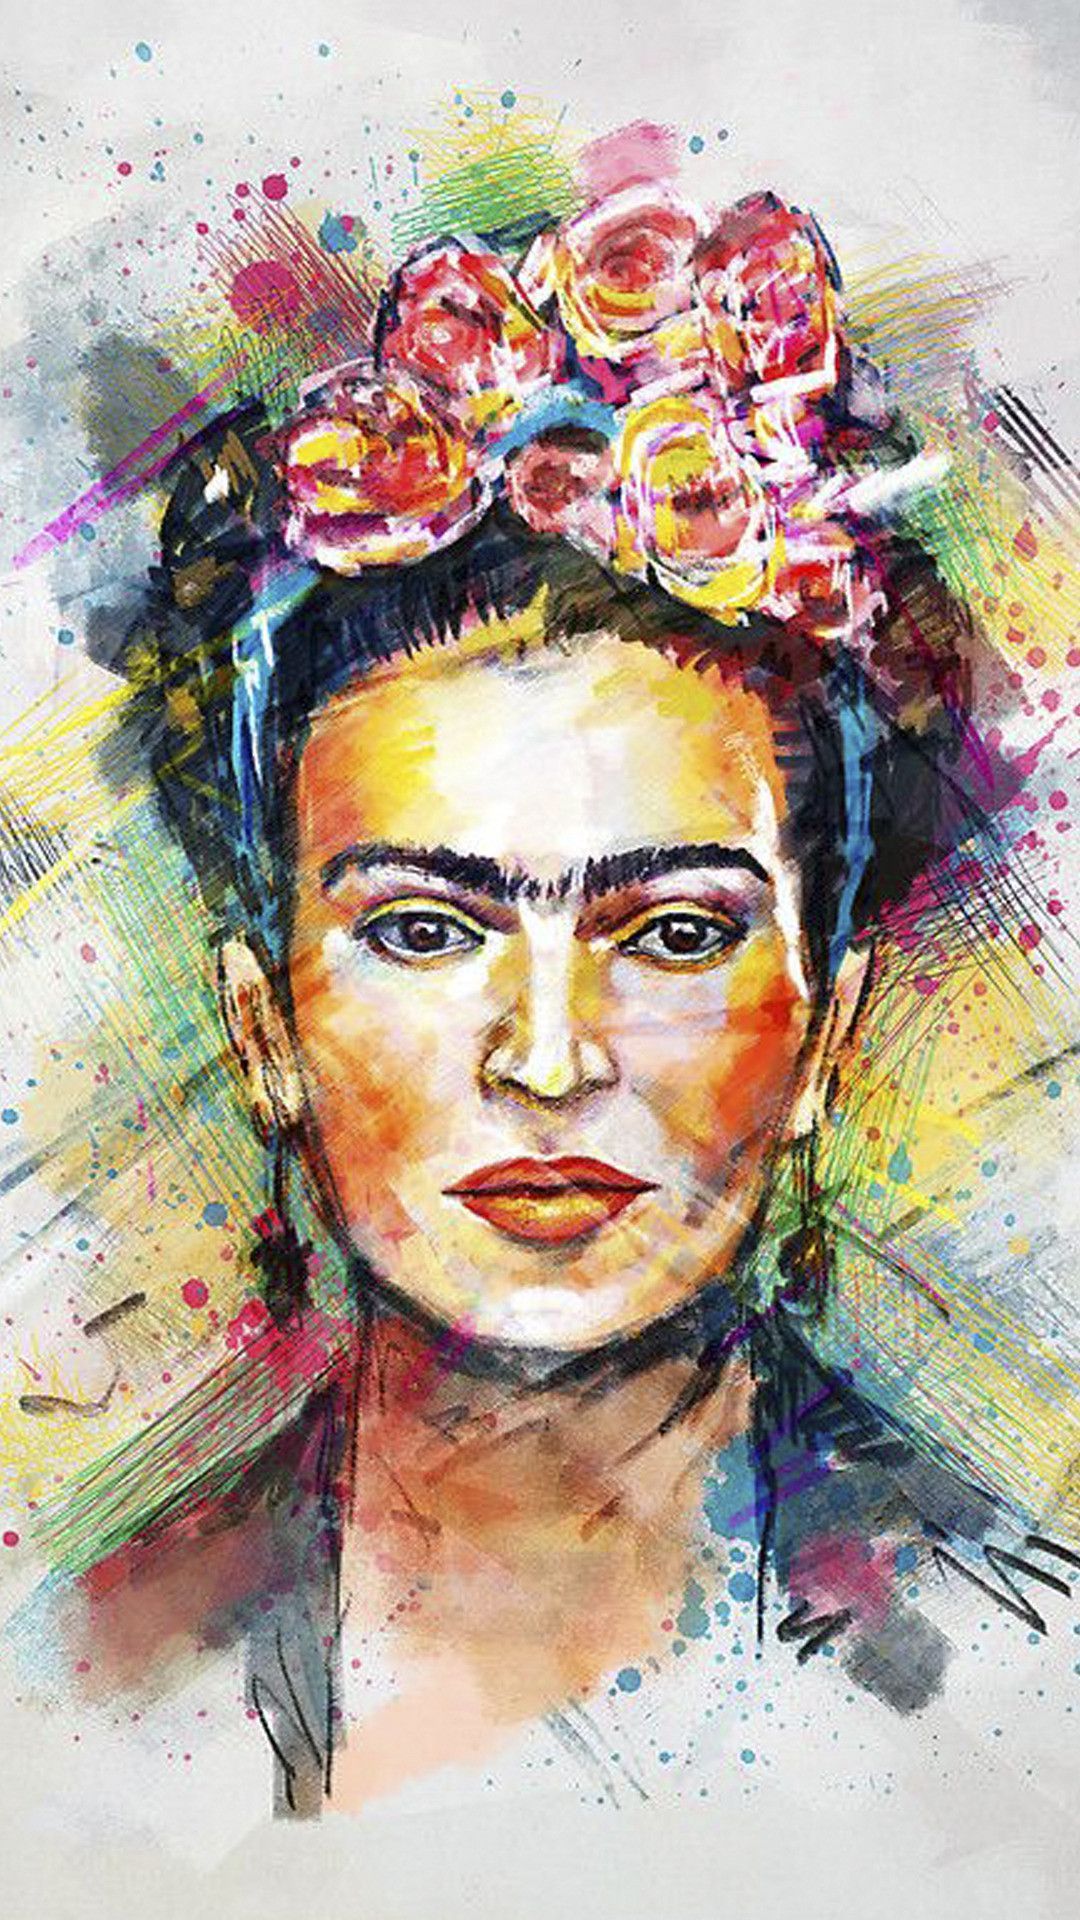 IPhone wallpaper with a portrait of Frida Kahlo - Frida Kahlo